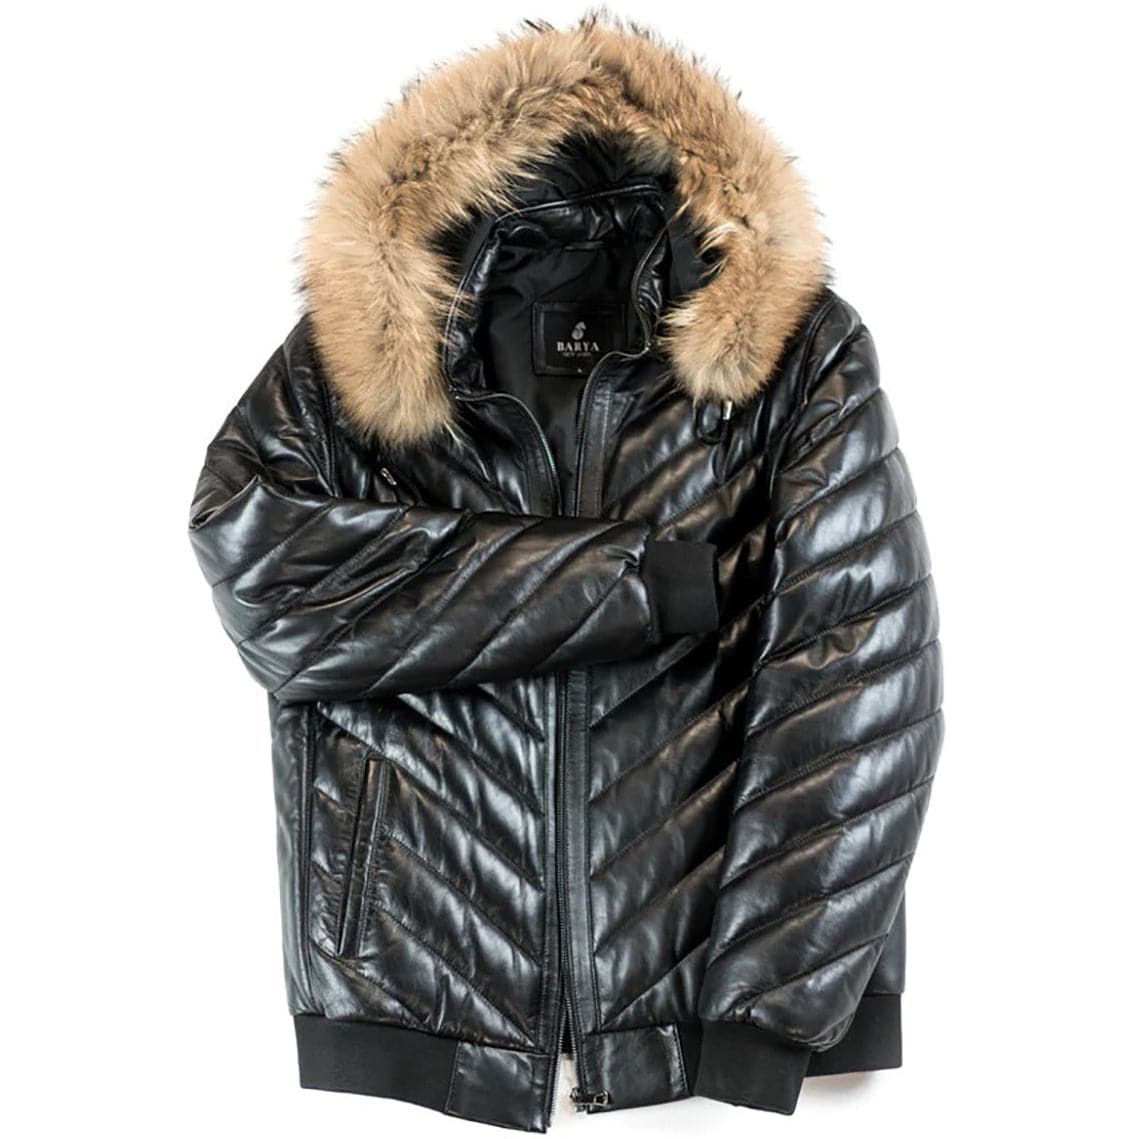 BARYA Leather Bomber Jacket with Real Fur - Zooloo Leather